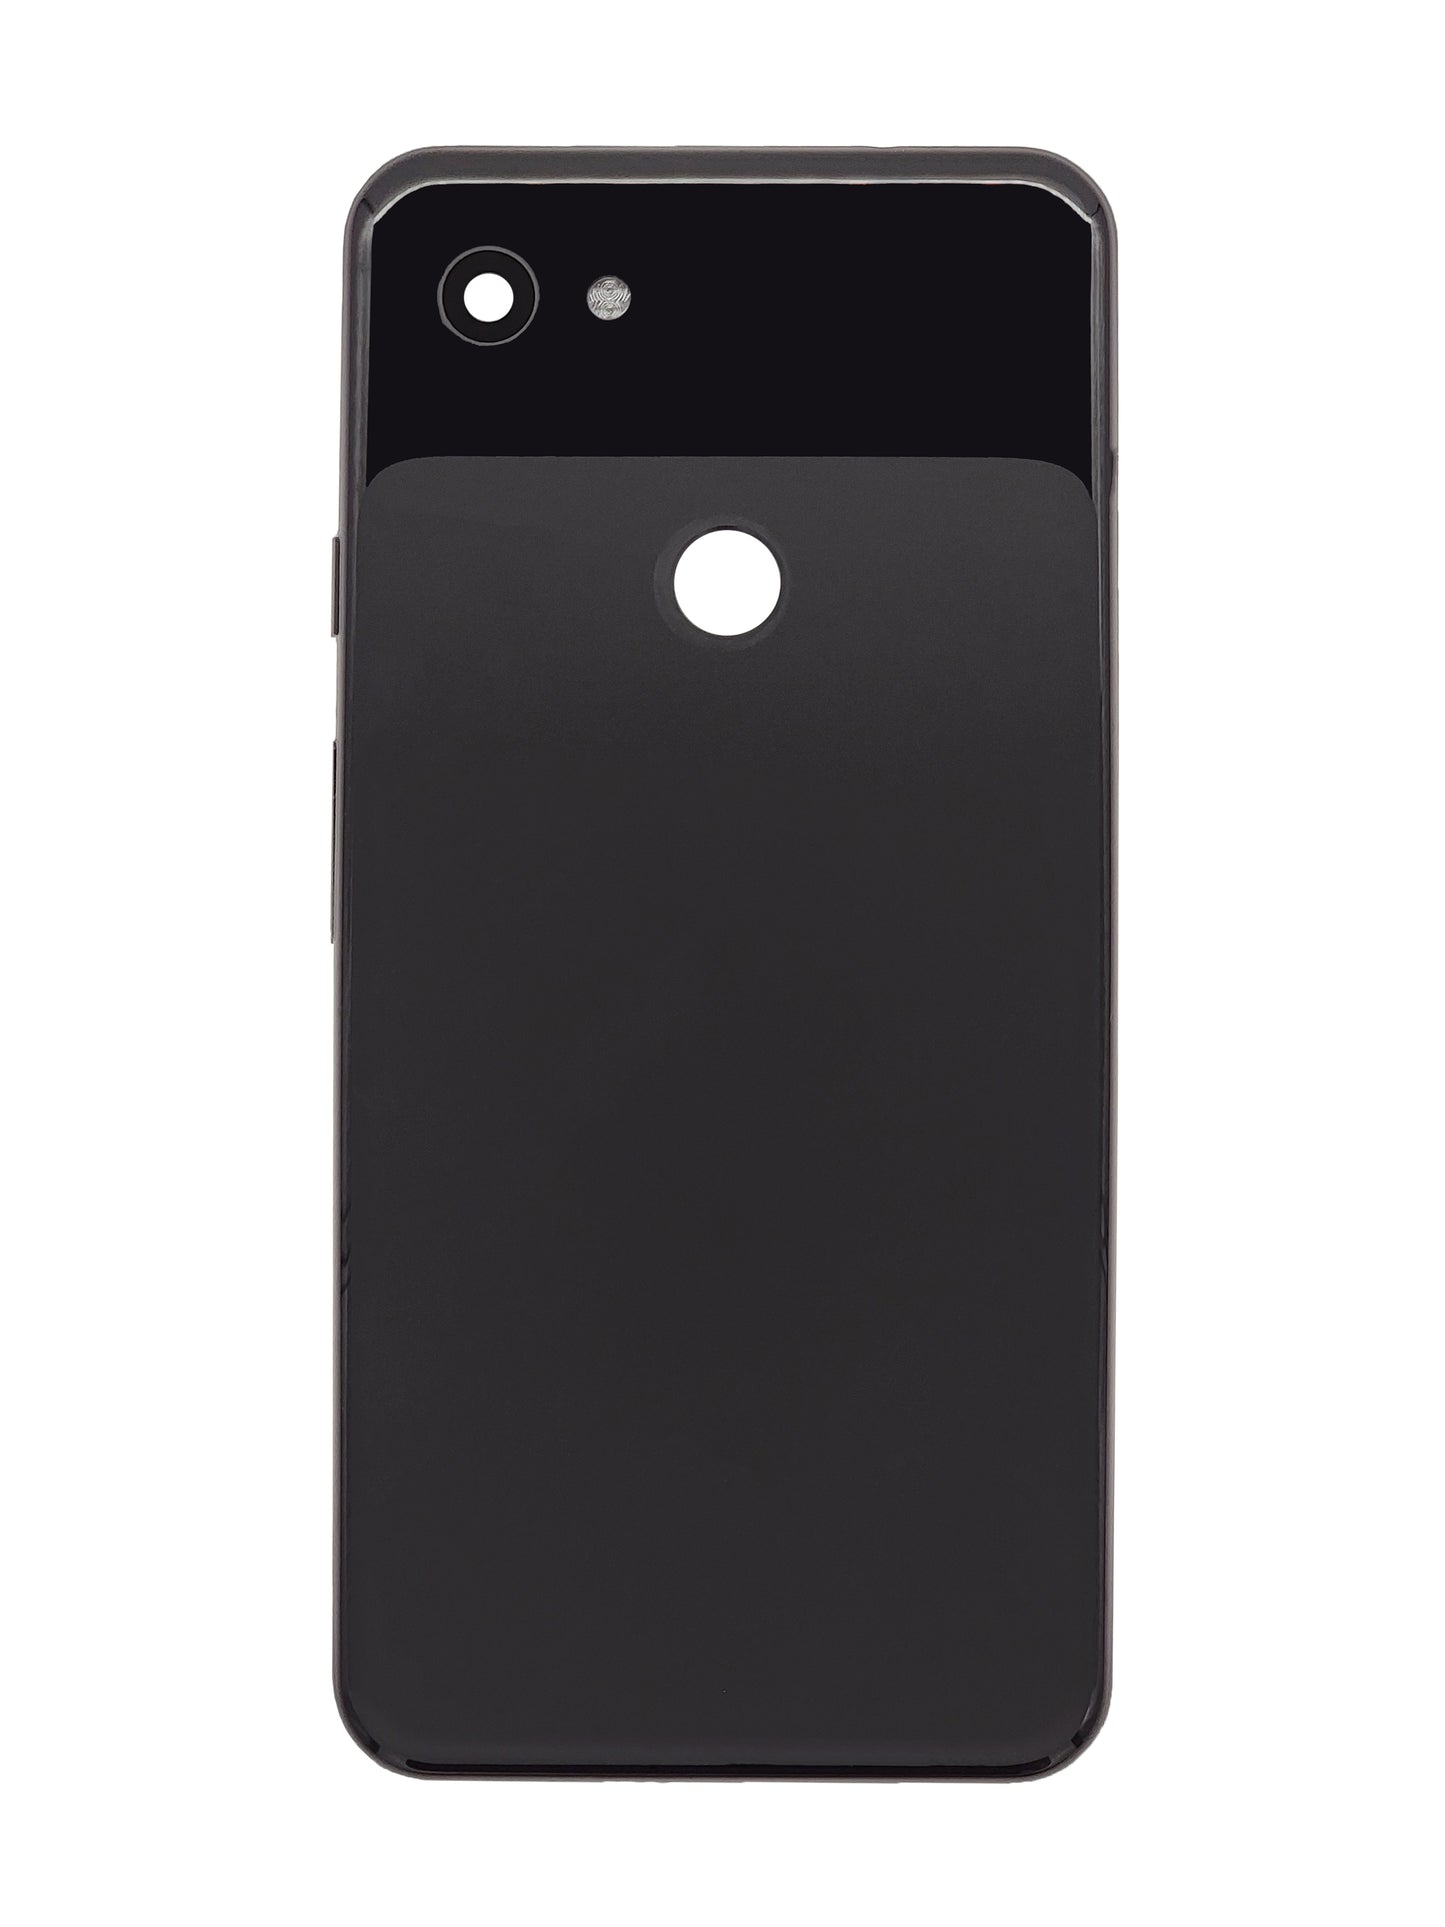 GOP Pixel 3A XL Back Cover (Black)